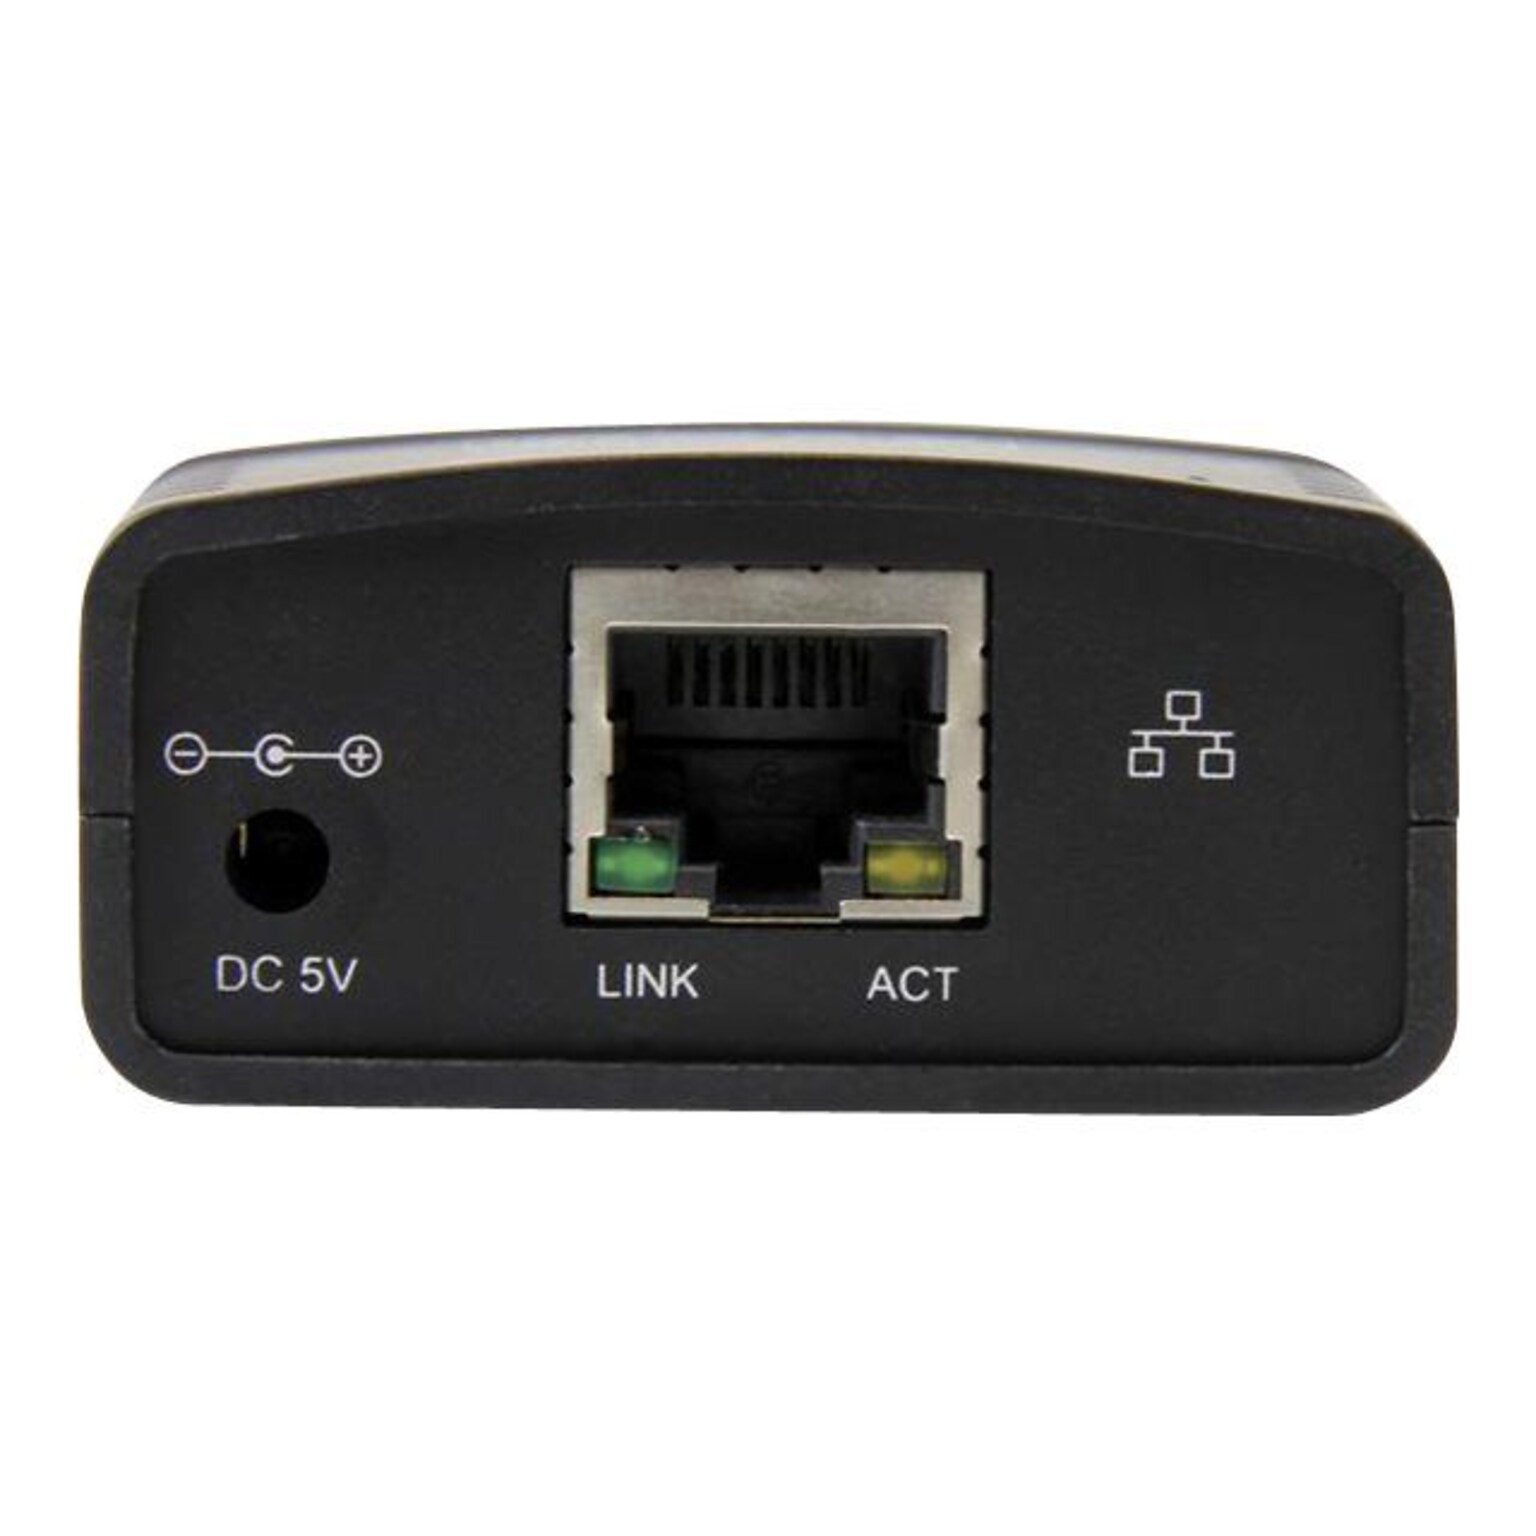 StarTech.com® PM1115U2 Black Ethernet to USB 2.0 Network LPR Print Server for Mac/PC